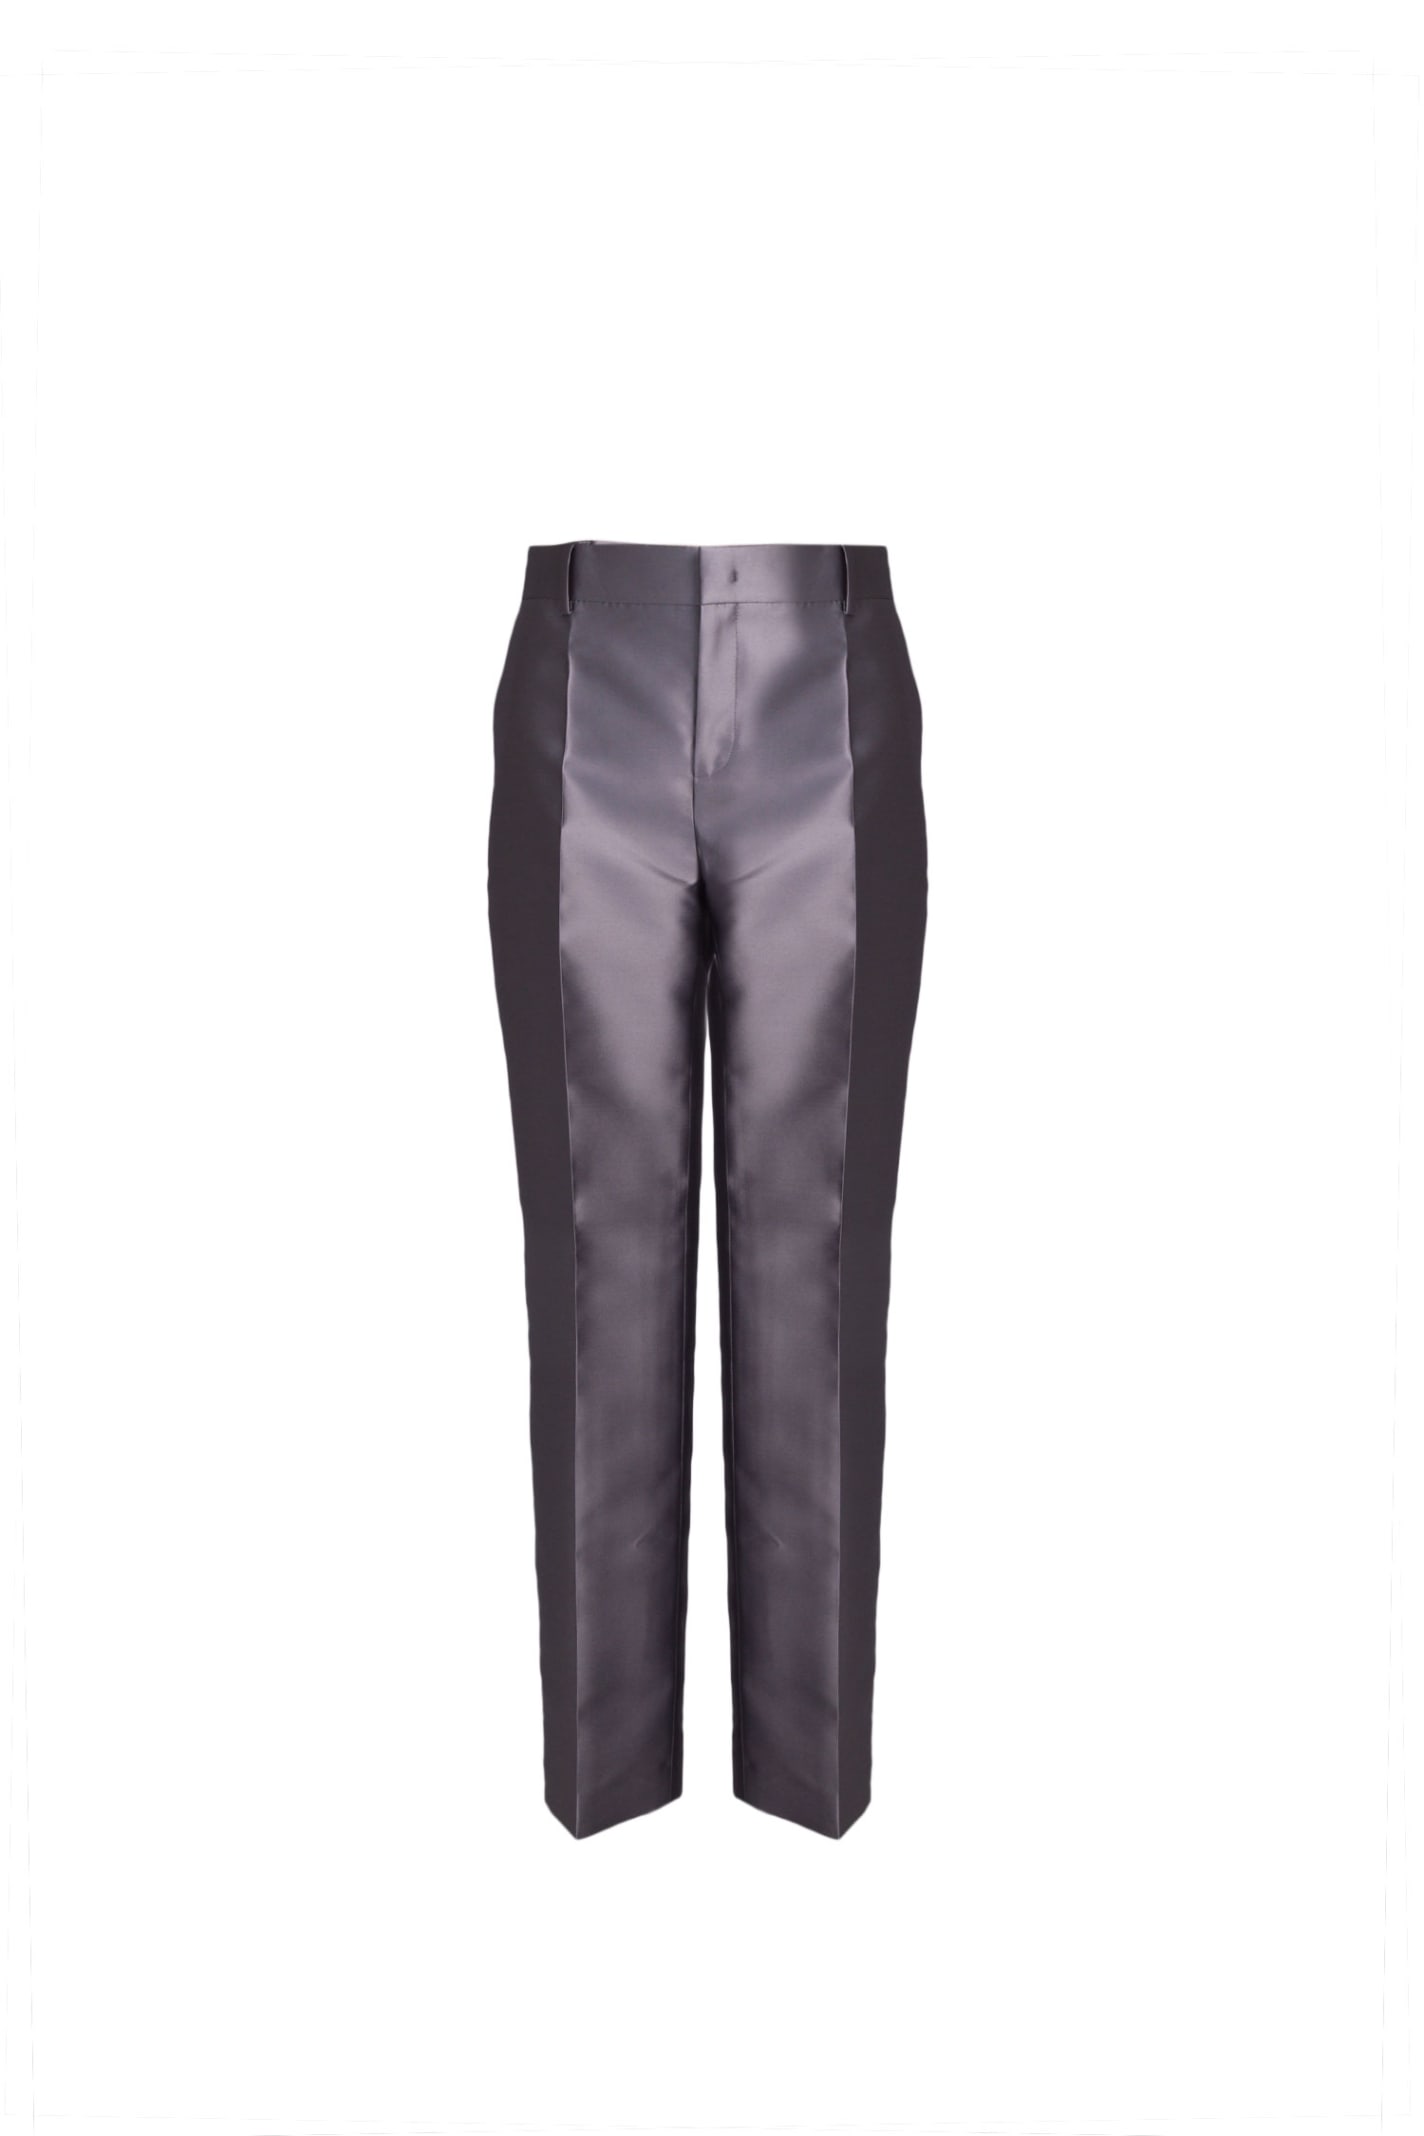 Alberta Ferretti Trousers In Grey